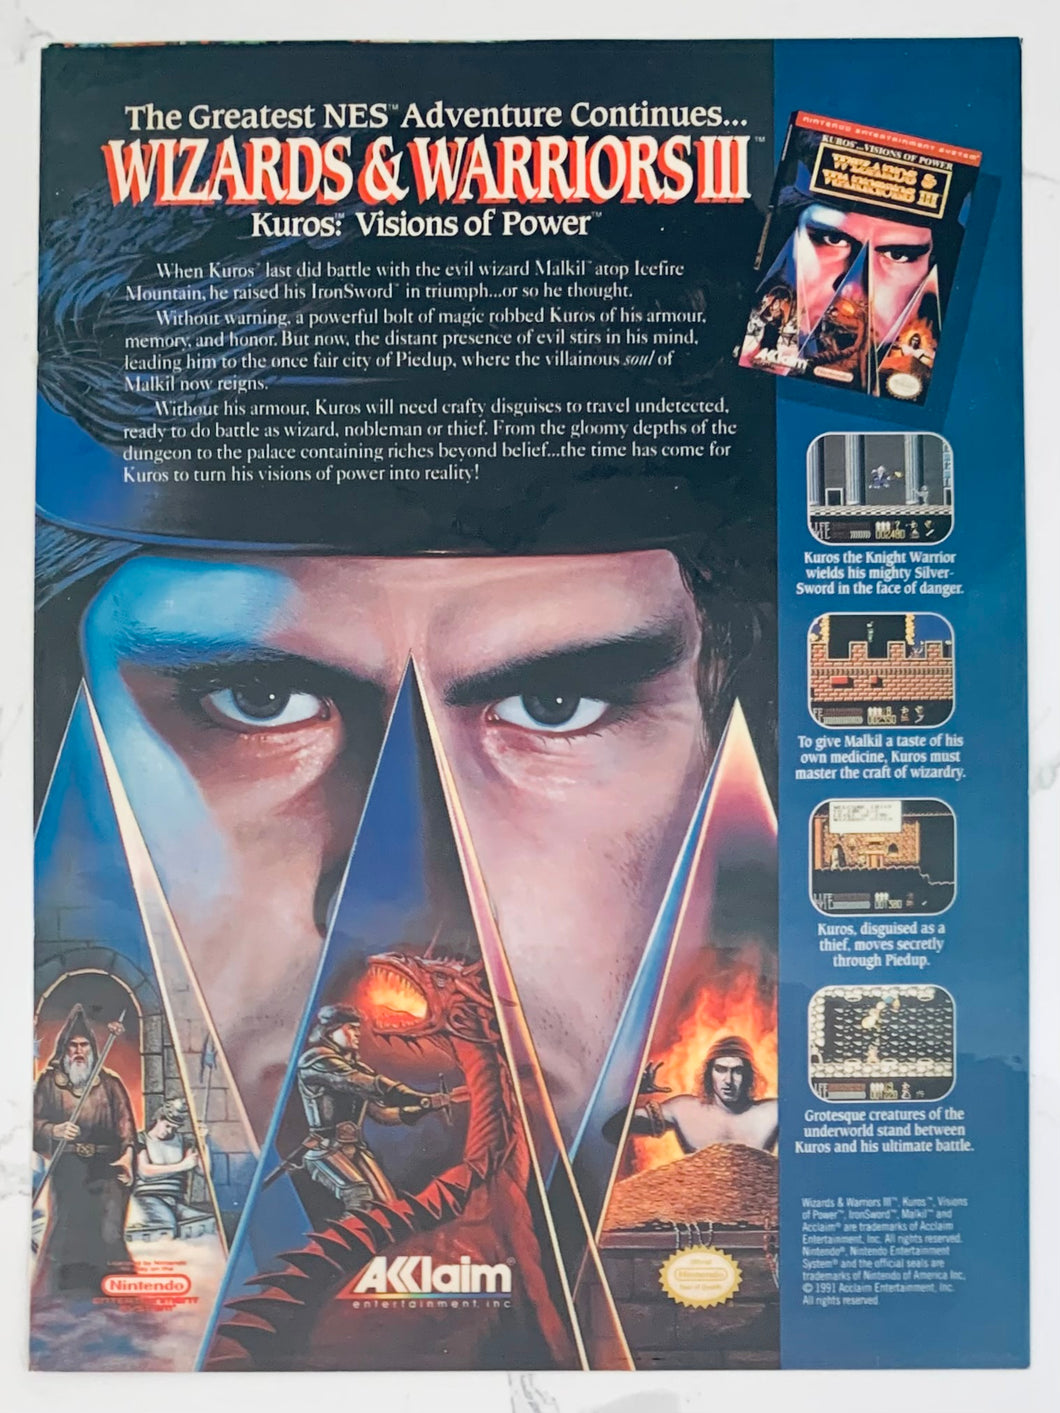 Wizards & Warriors III - NES - Original Vintage Advertisement - Print Ads - Laminated A4 Poster